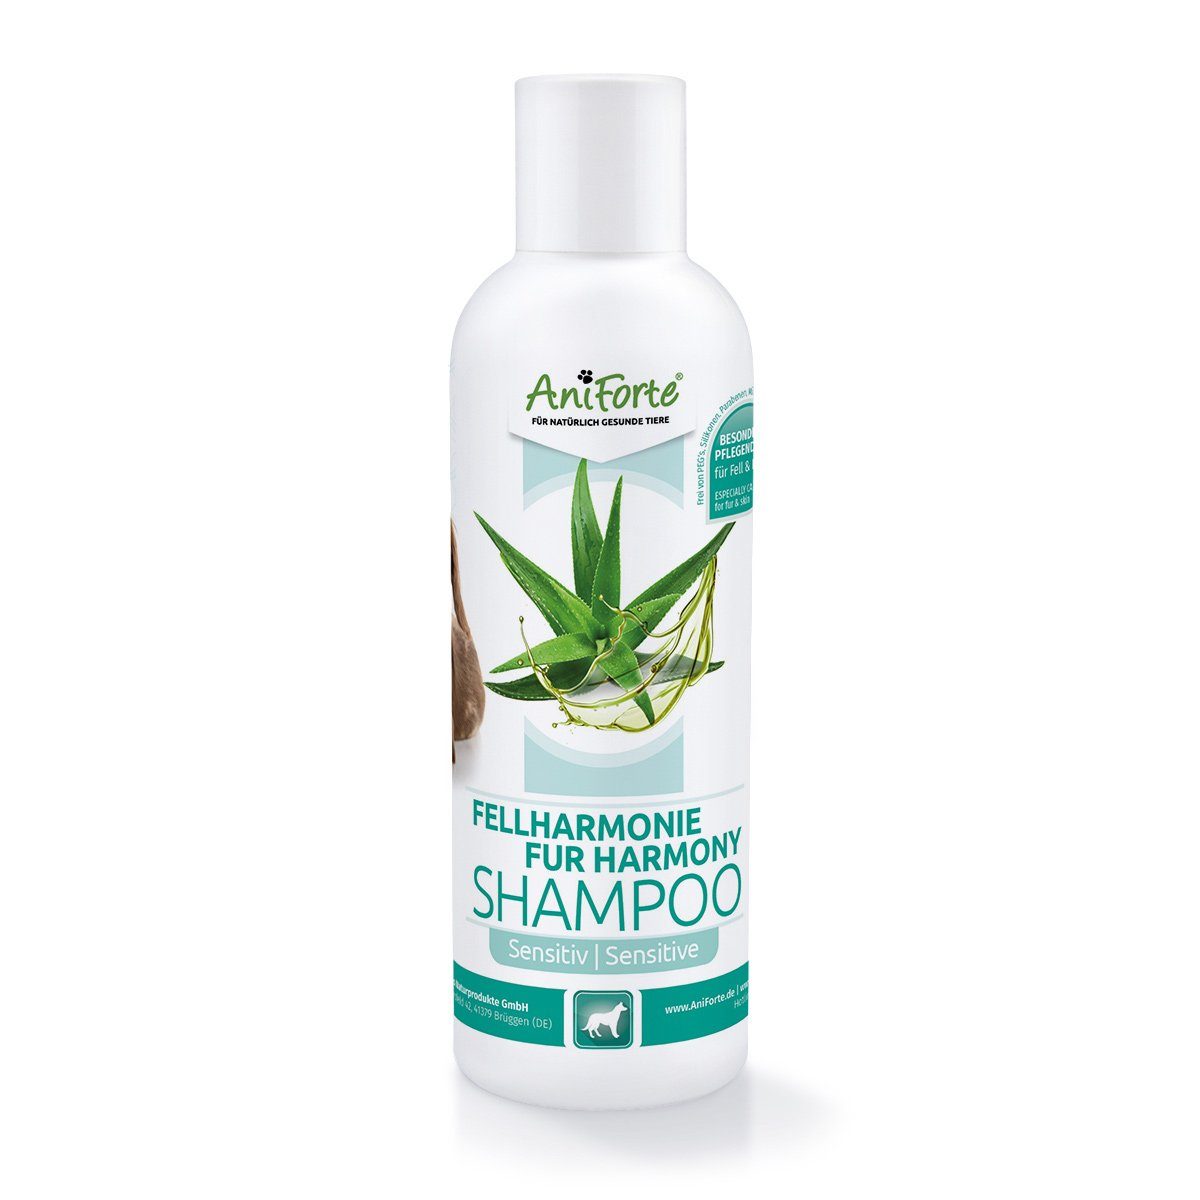 Fur Harmony Sensitive Shampoo for Dogs - 200ml - AniForte UK